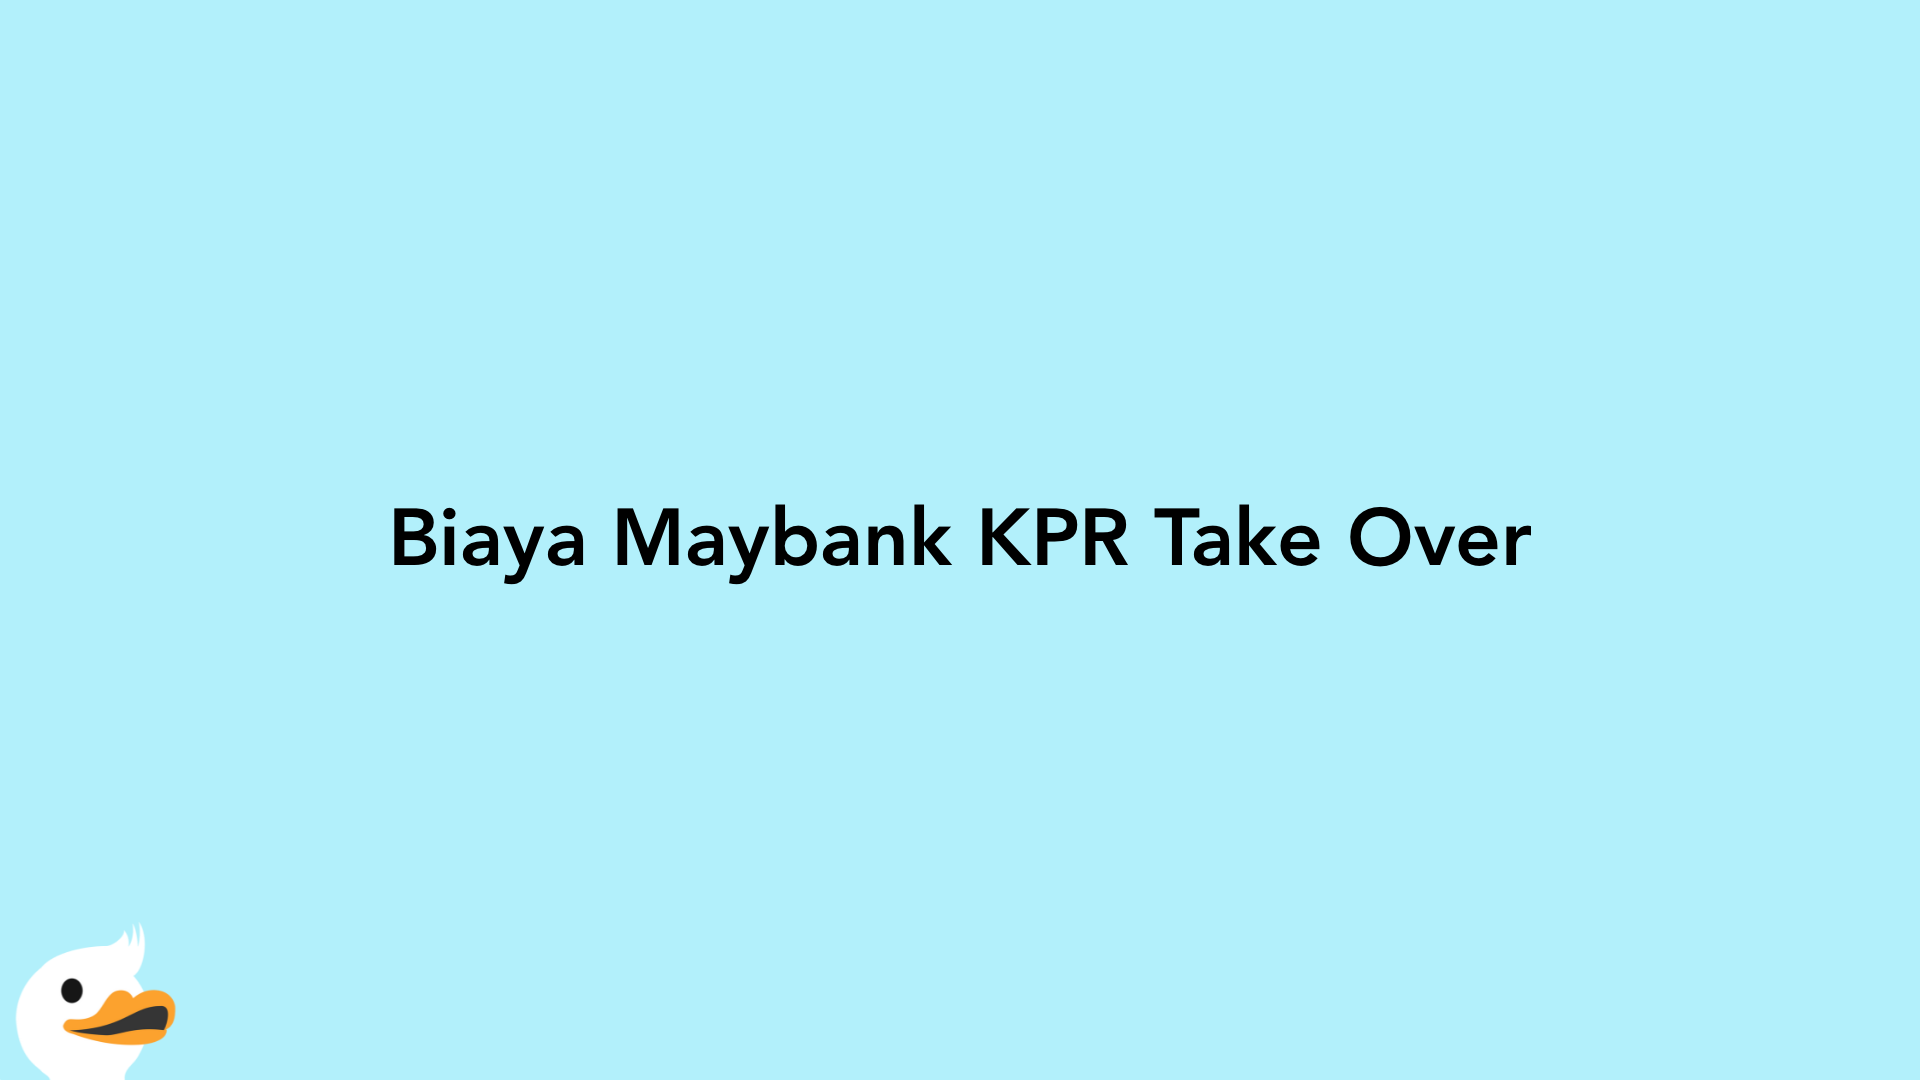 Biaya Maybank KPR Take Over